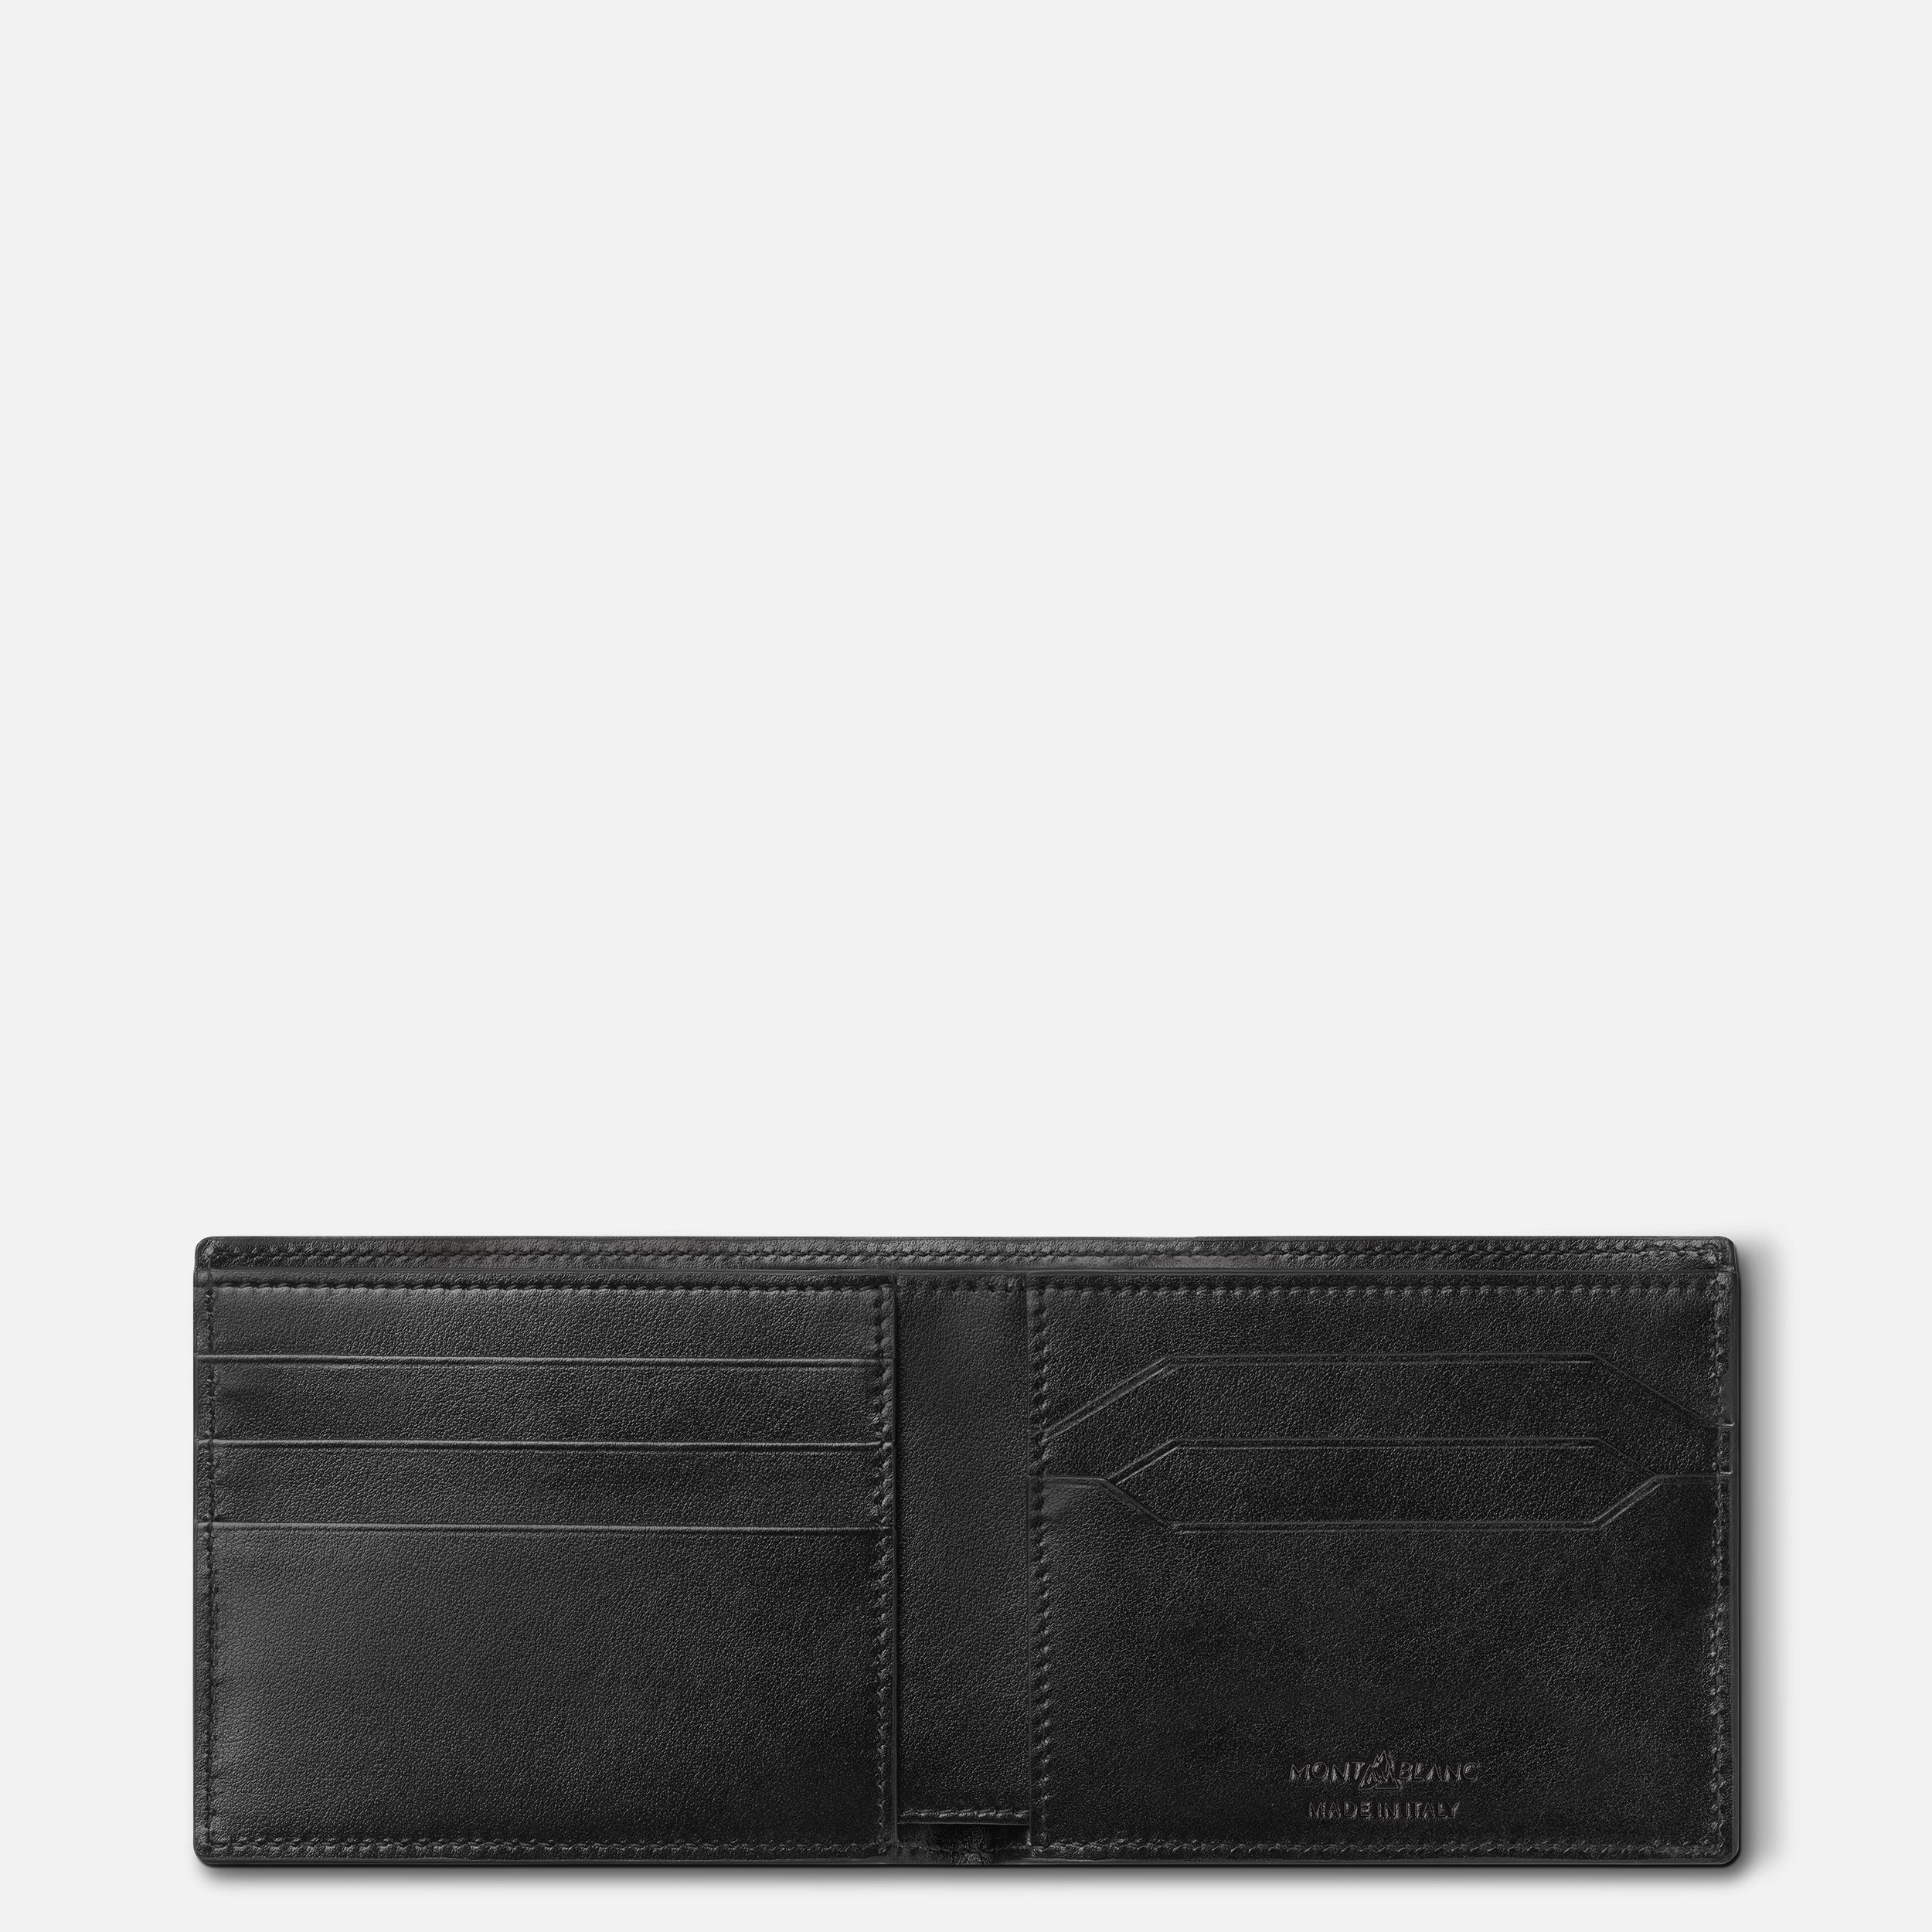 Meisterstück wallet 6cc - 3